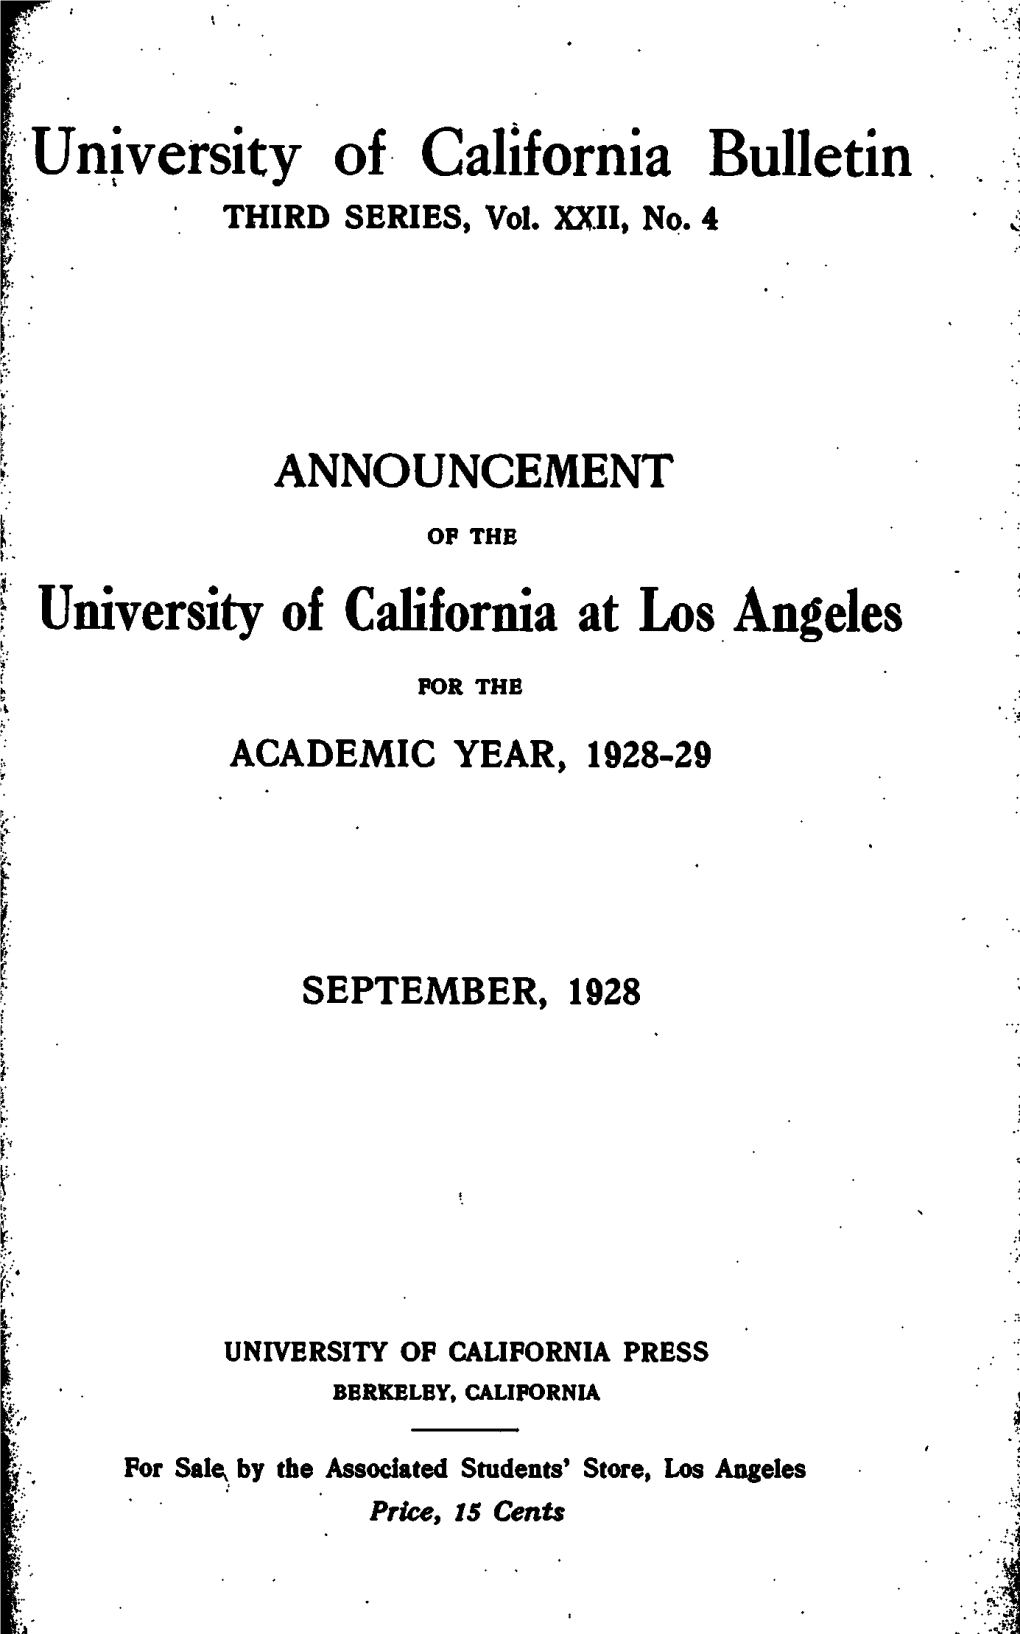 University of California Bulletin Announcement 1928-29